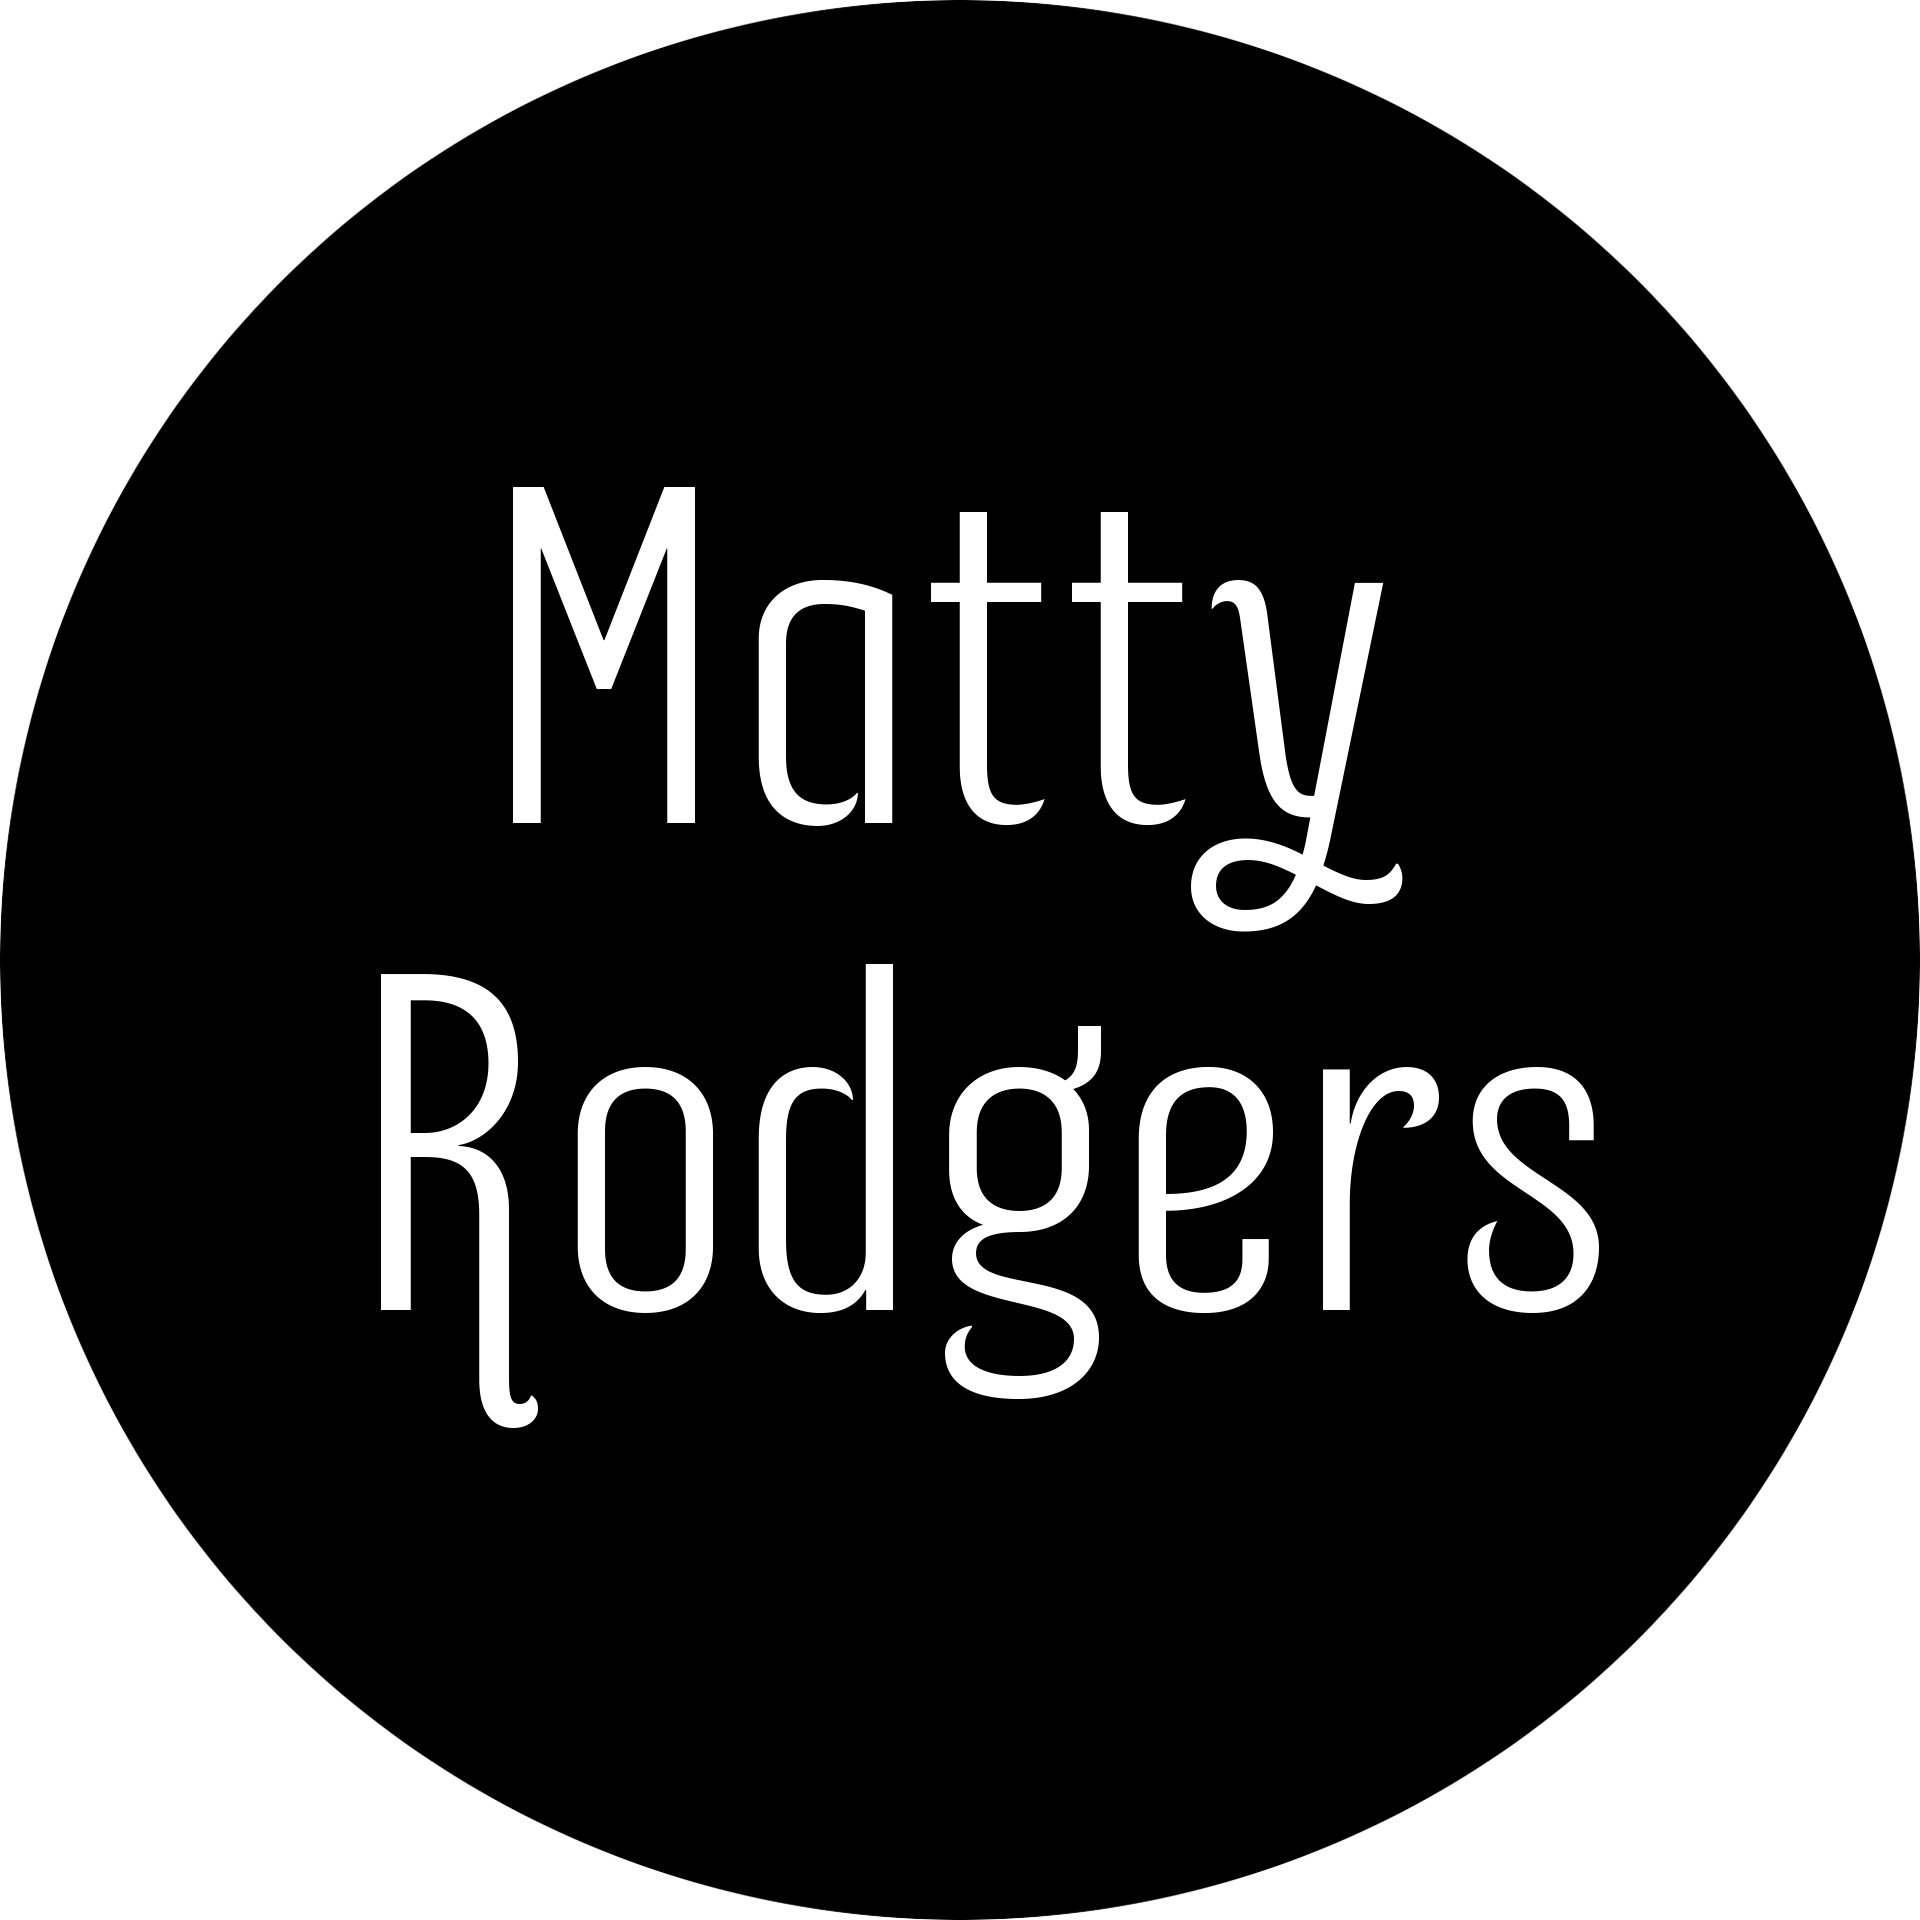 Matthew Rodgers